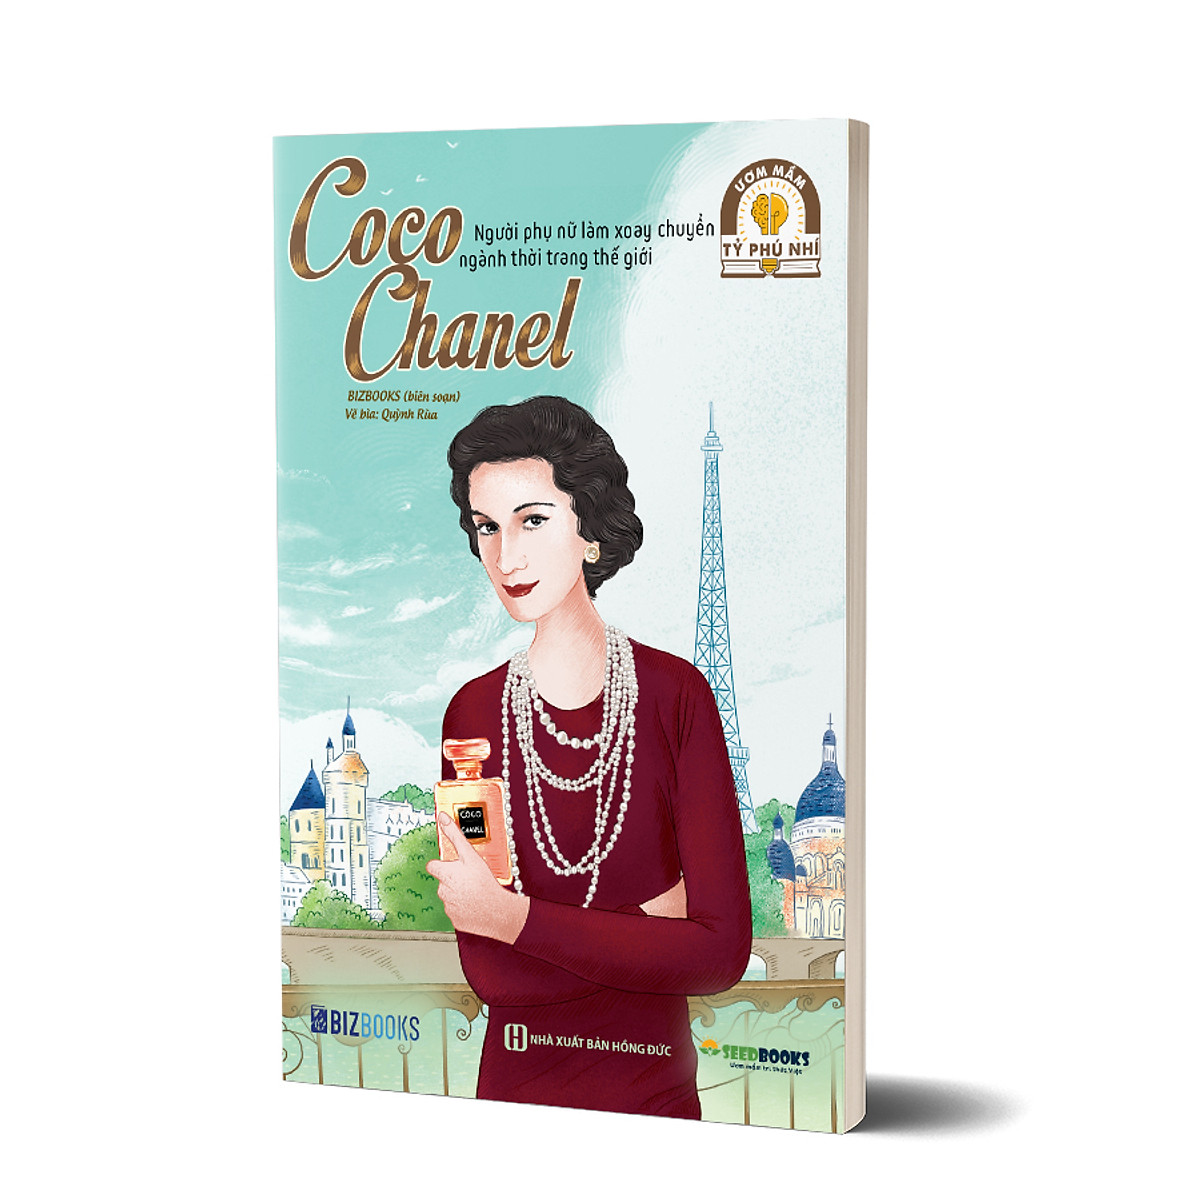 Gabrielle Chanel and the Arts phim tài liệu về Coco Chanel lên sóng   Harpers Bazaar